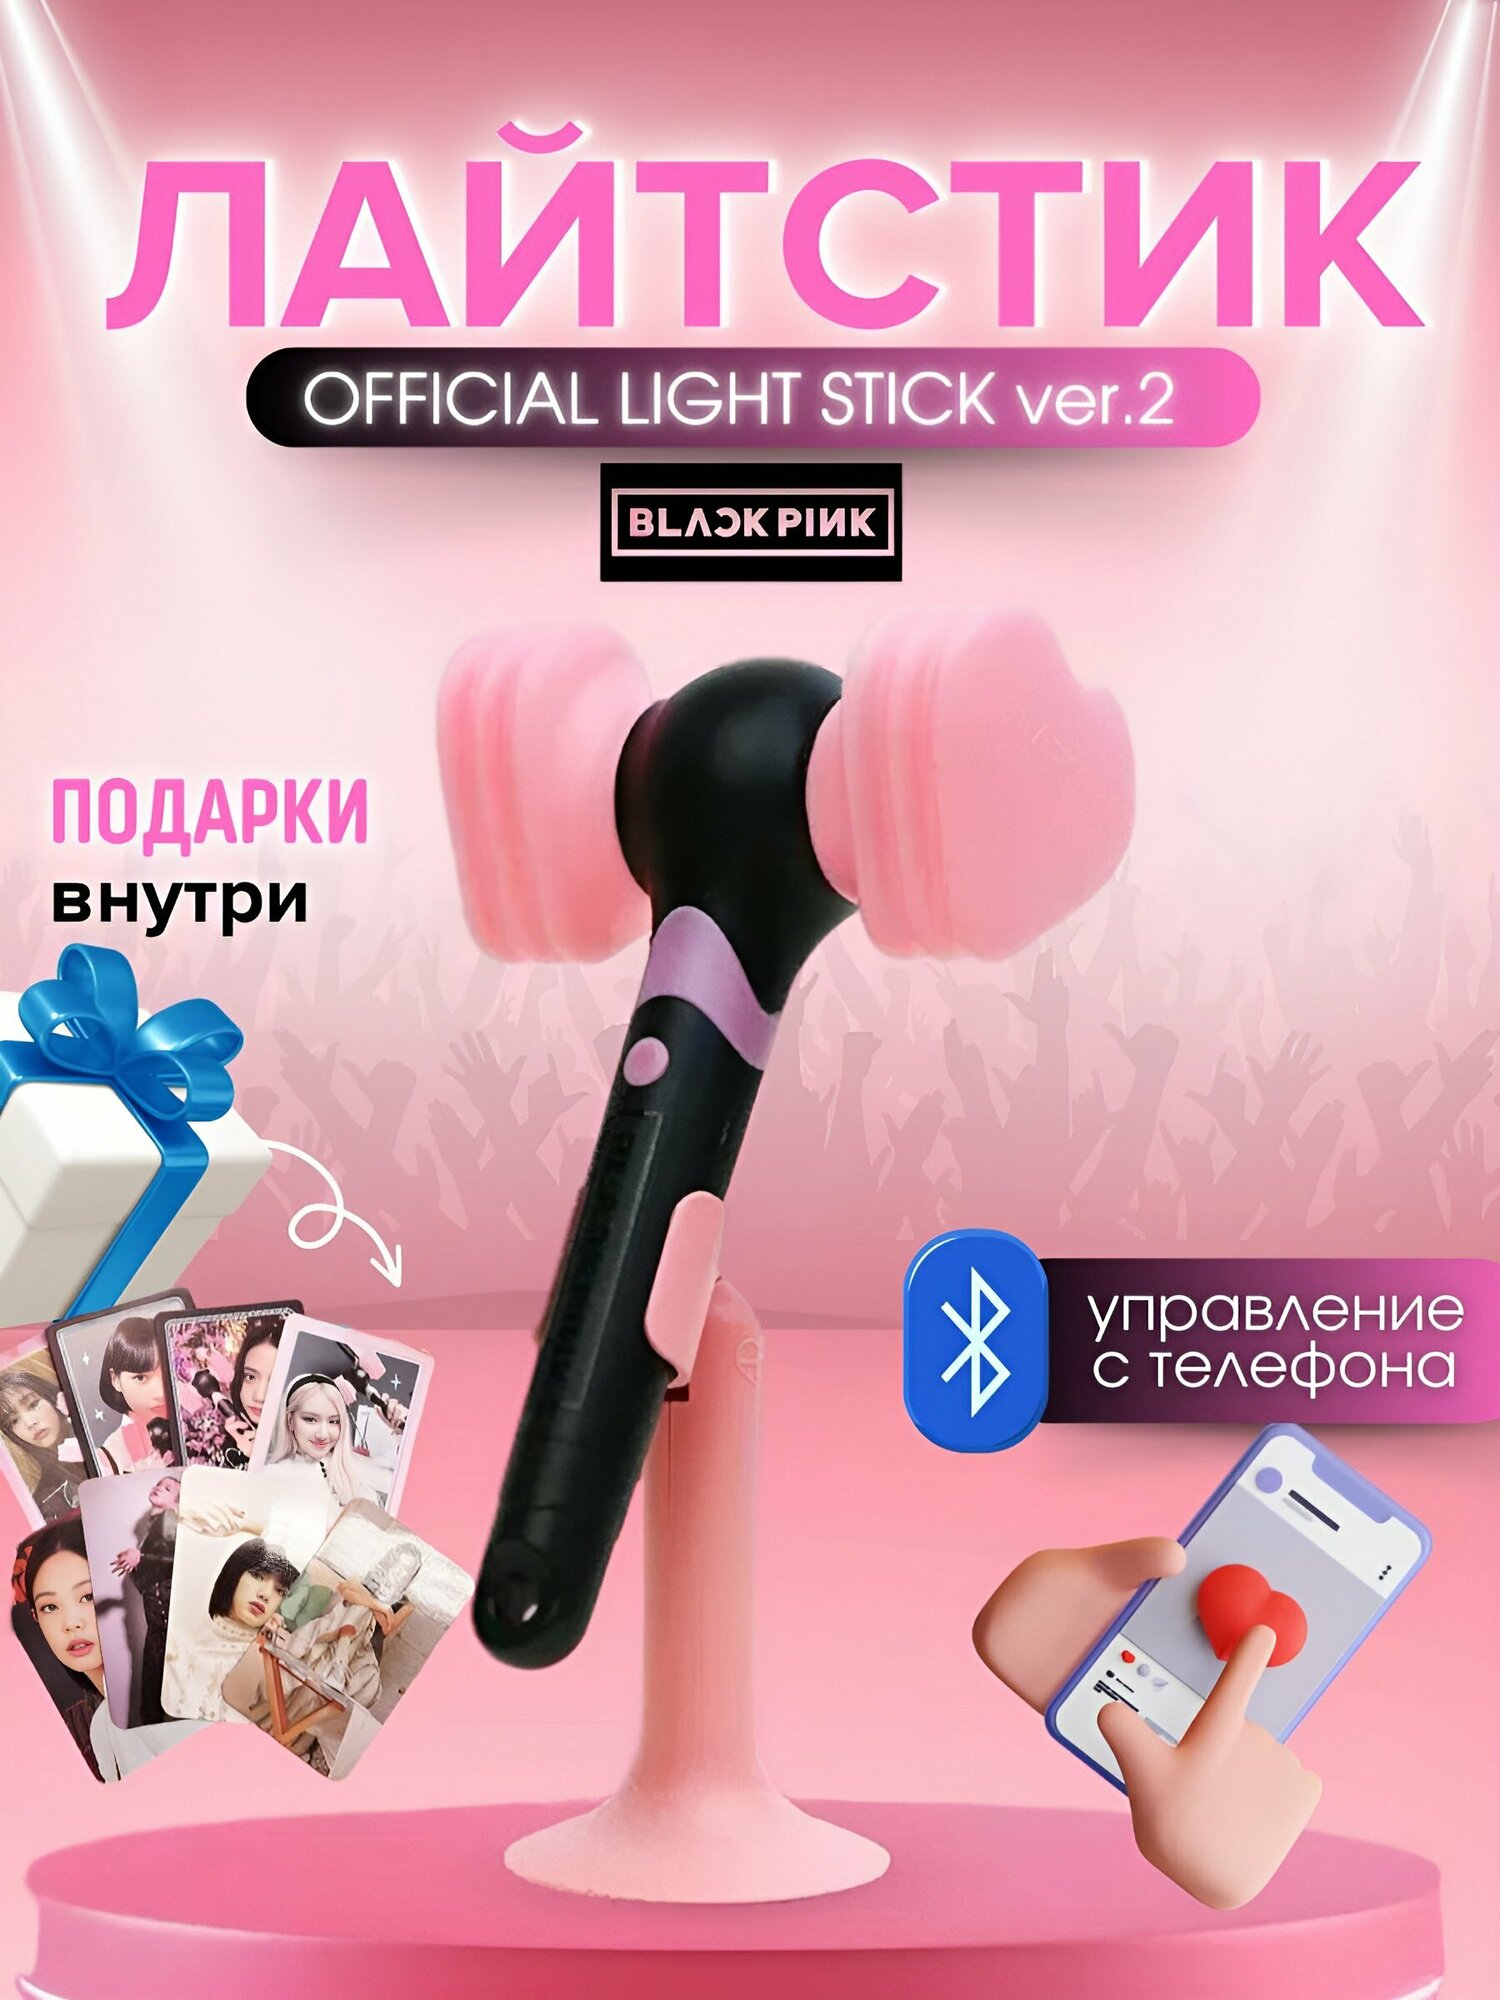 BLACKPINK официальный Lightstick